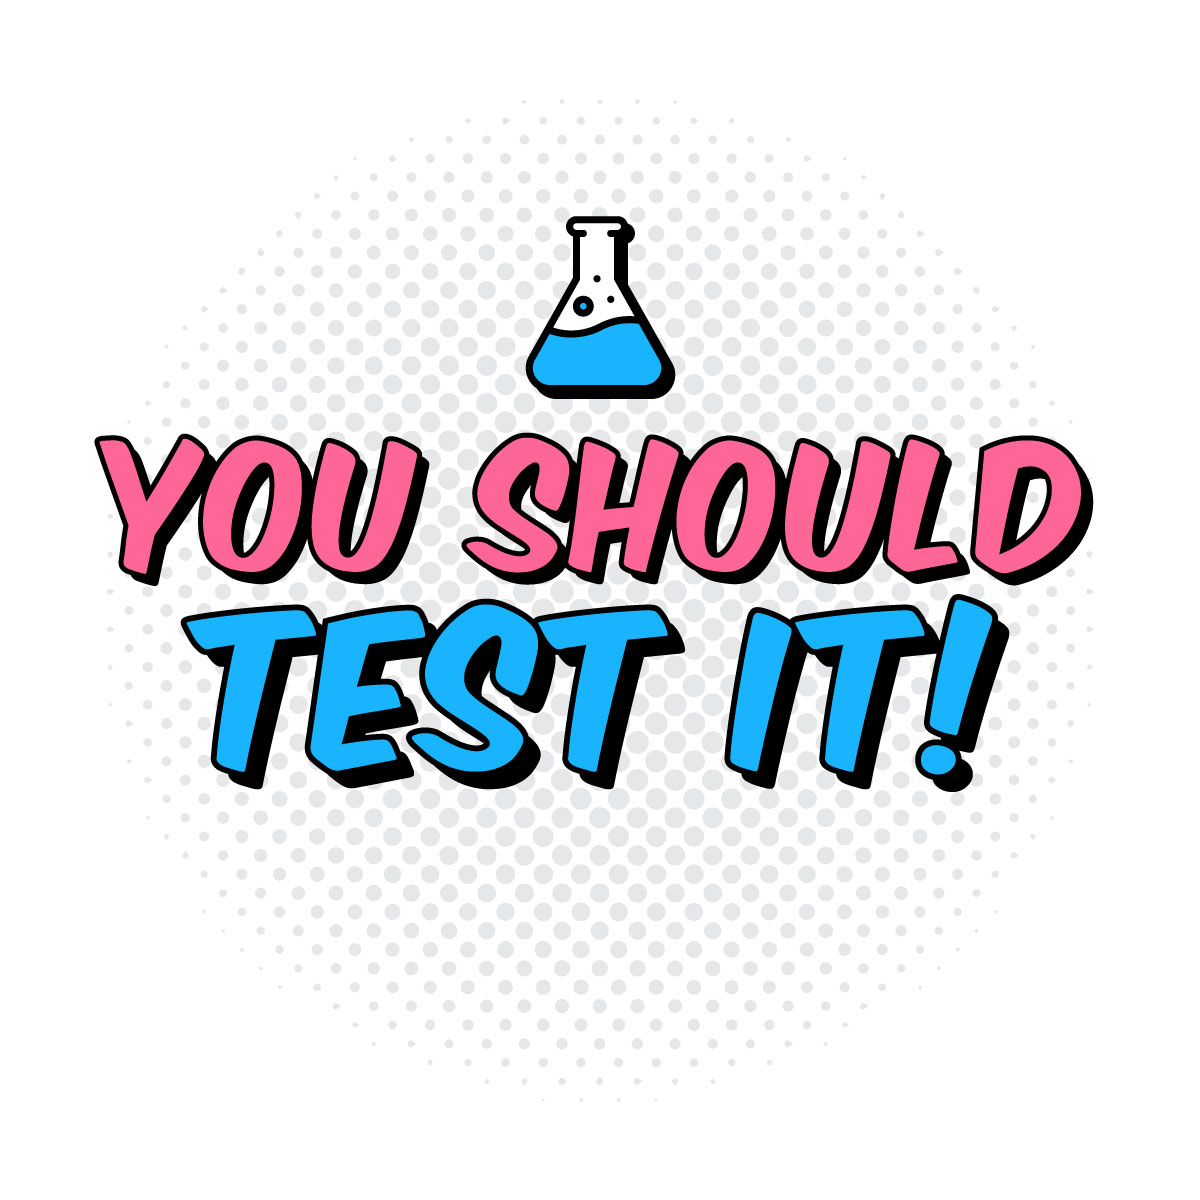 You Should Test It!